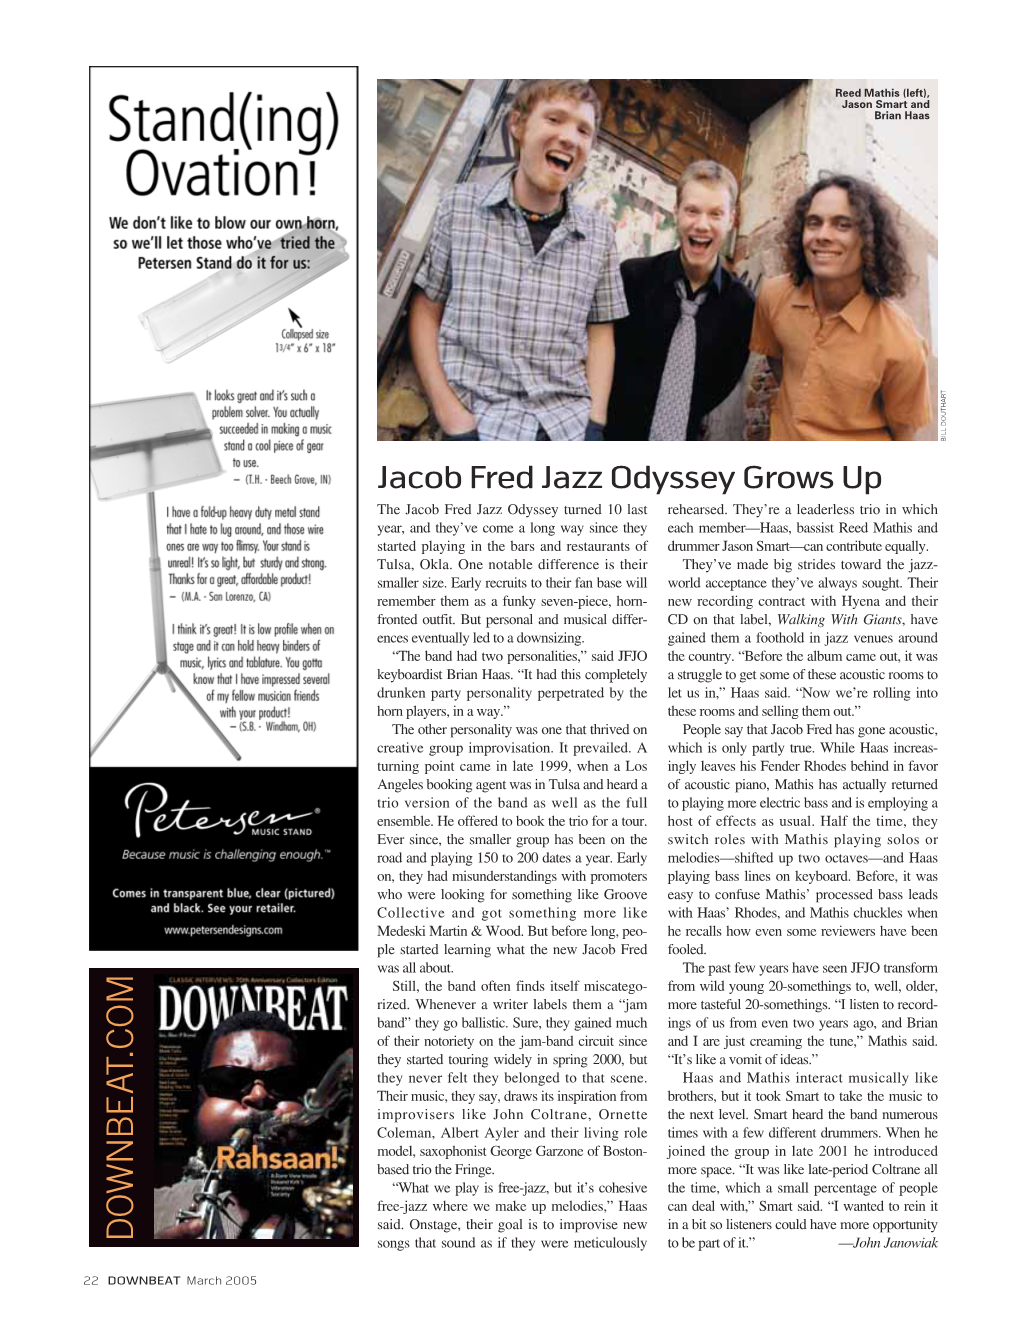 Jacob Fred Jazz Odyssey Grows up the Jacob Fred Jazz Odyssey Turned 10 Last Rehearsed